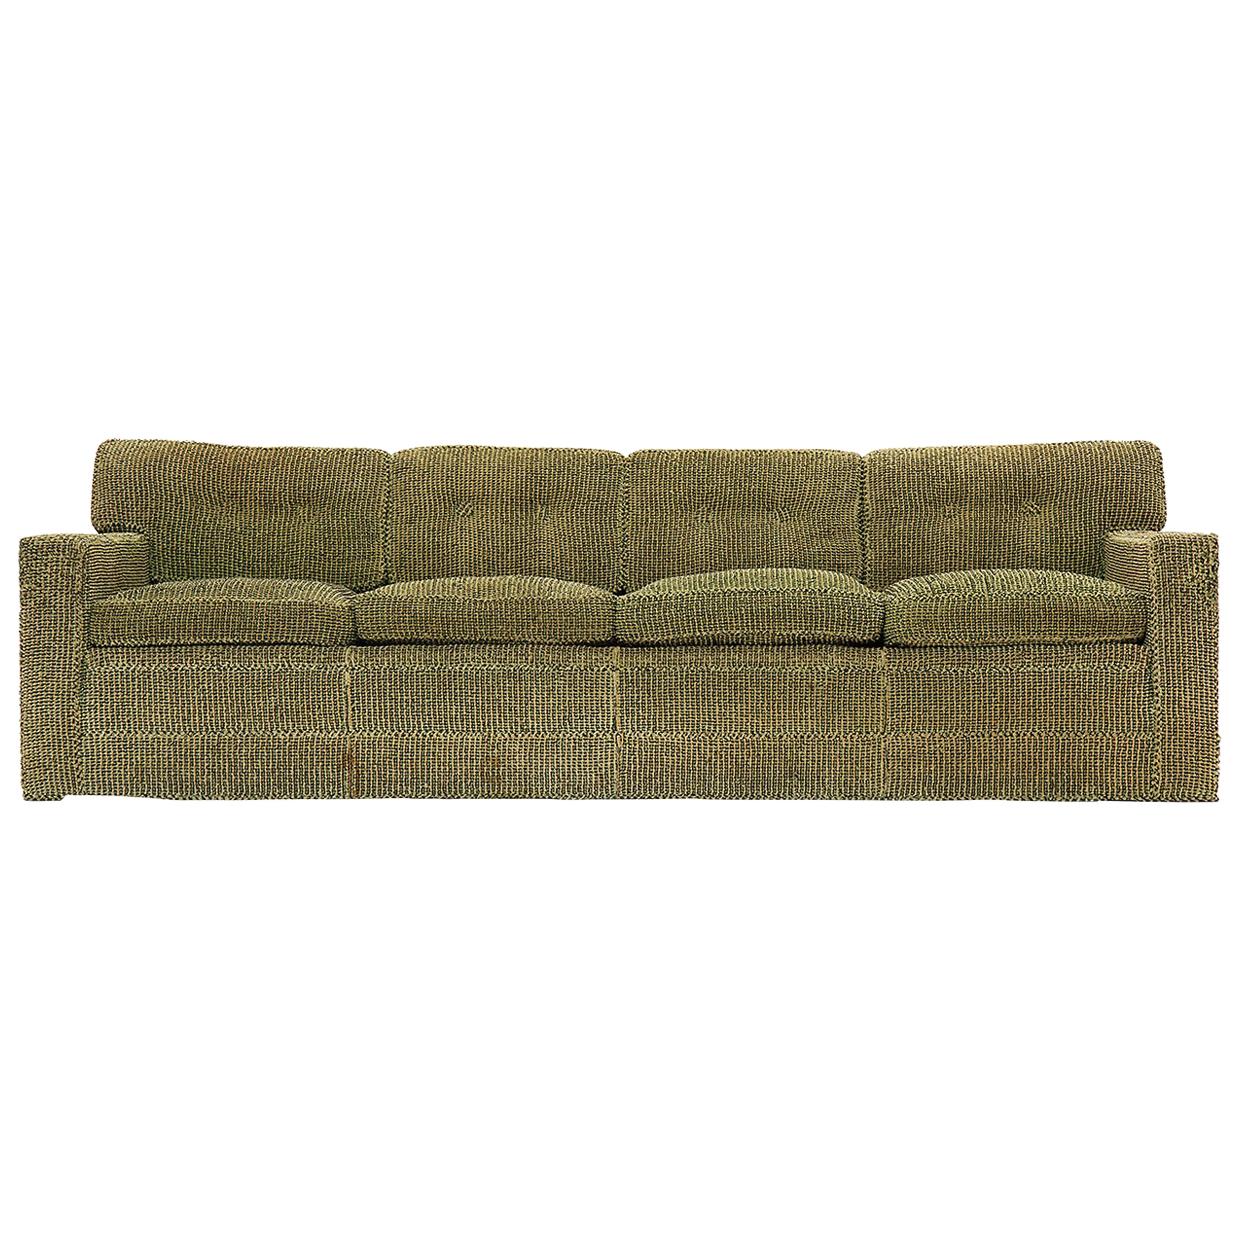 Sofa by W & J Sloane